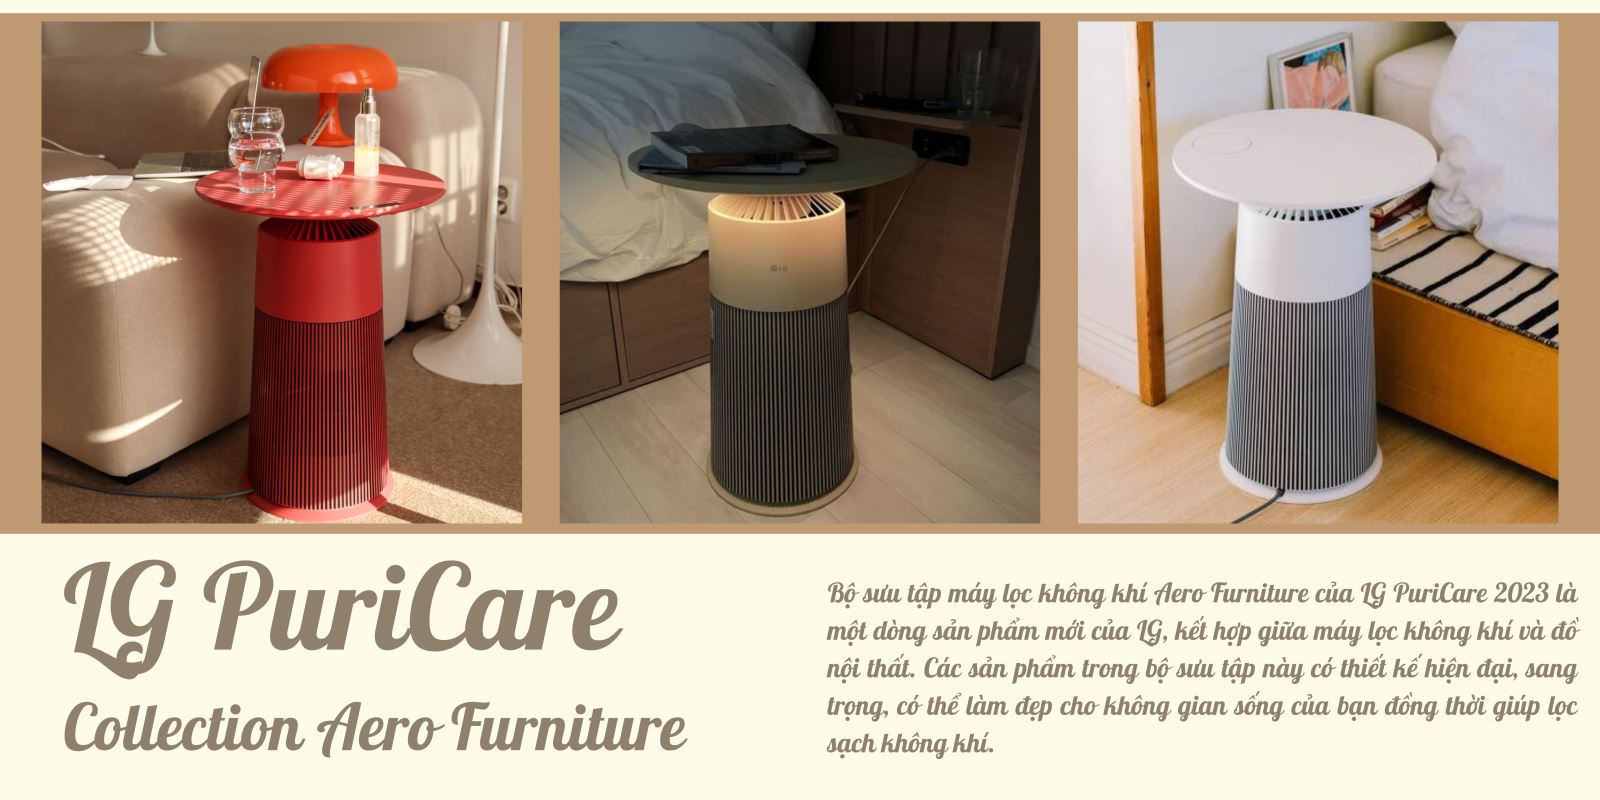 Trang trí nội thất với LG PuriCare Collection Aero Furniture